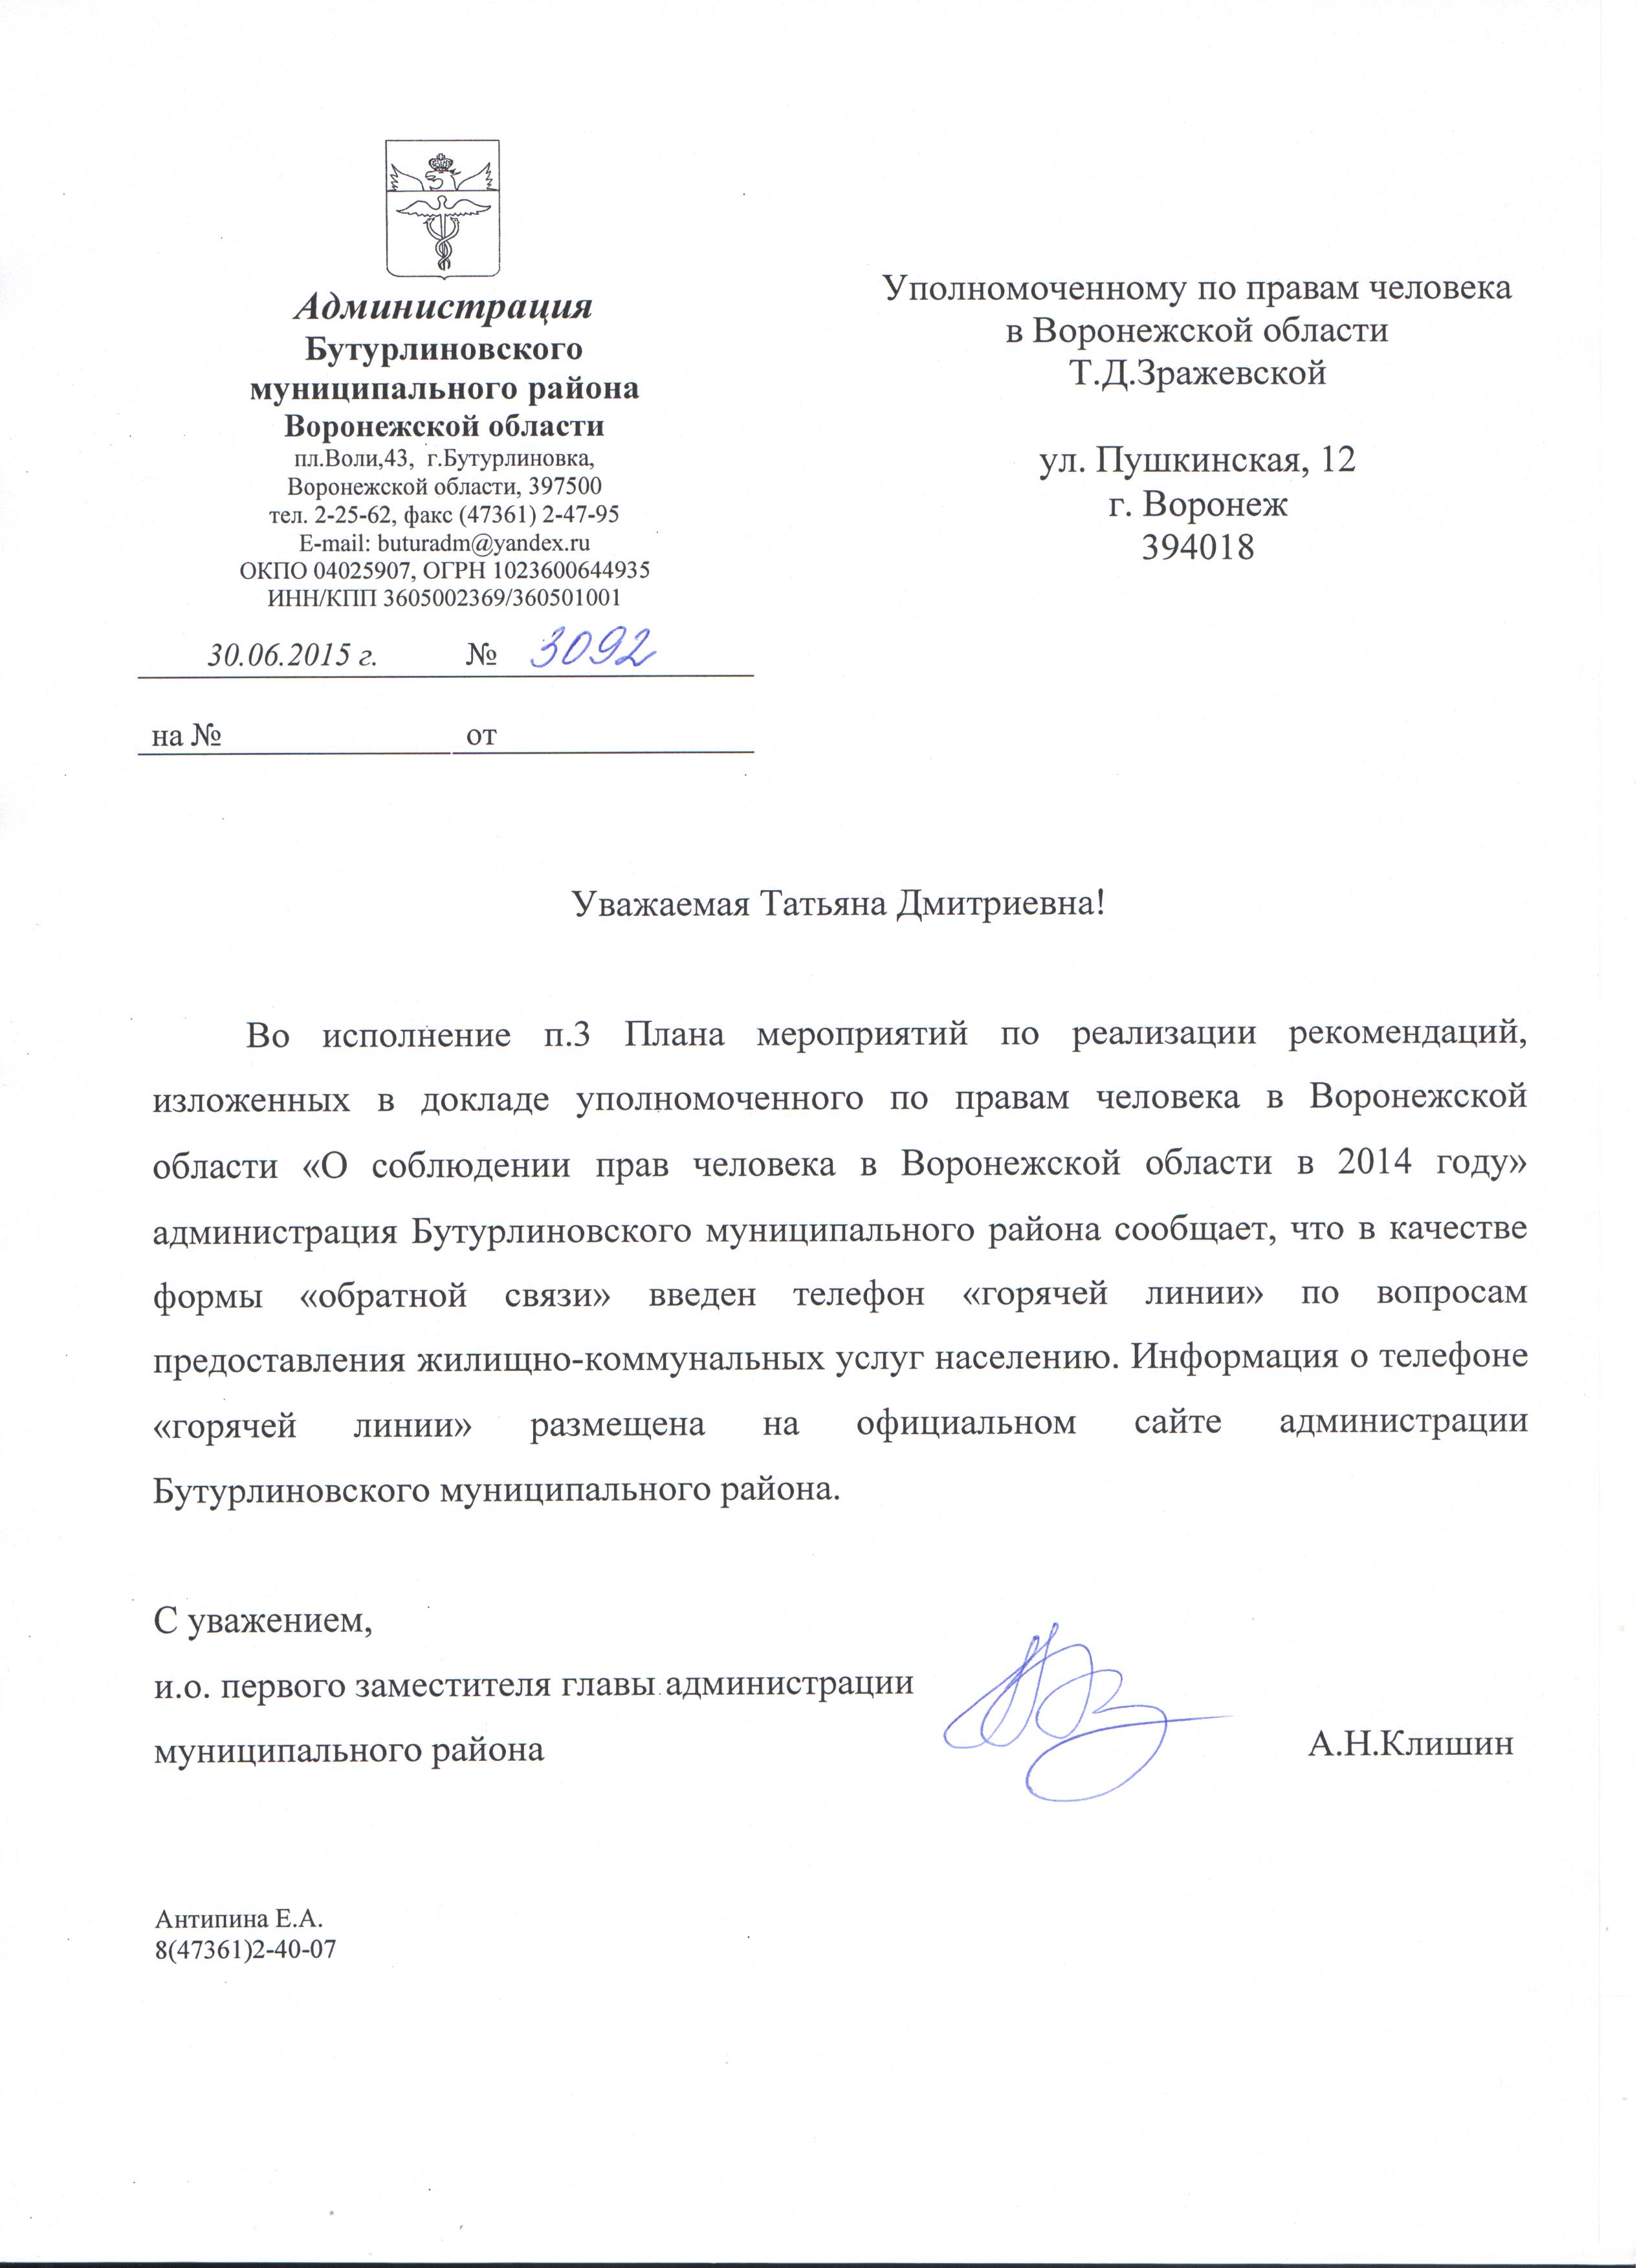 files:buturlinovskij_municipalnyj_rajon_otchjot.jpg